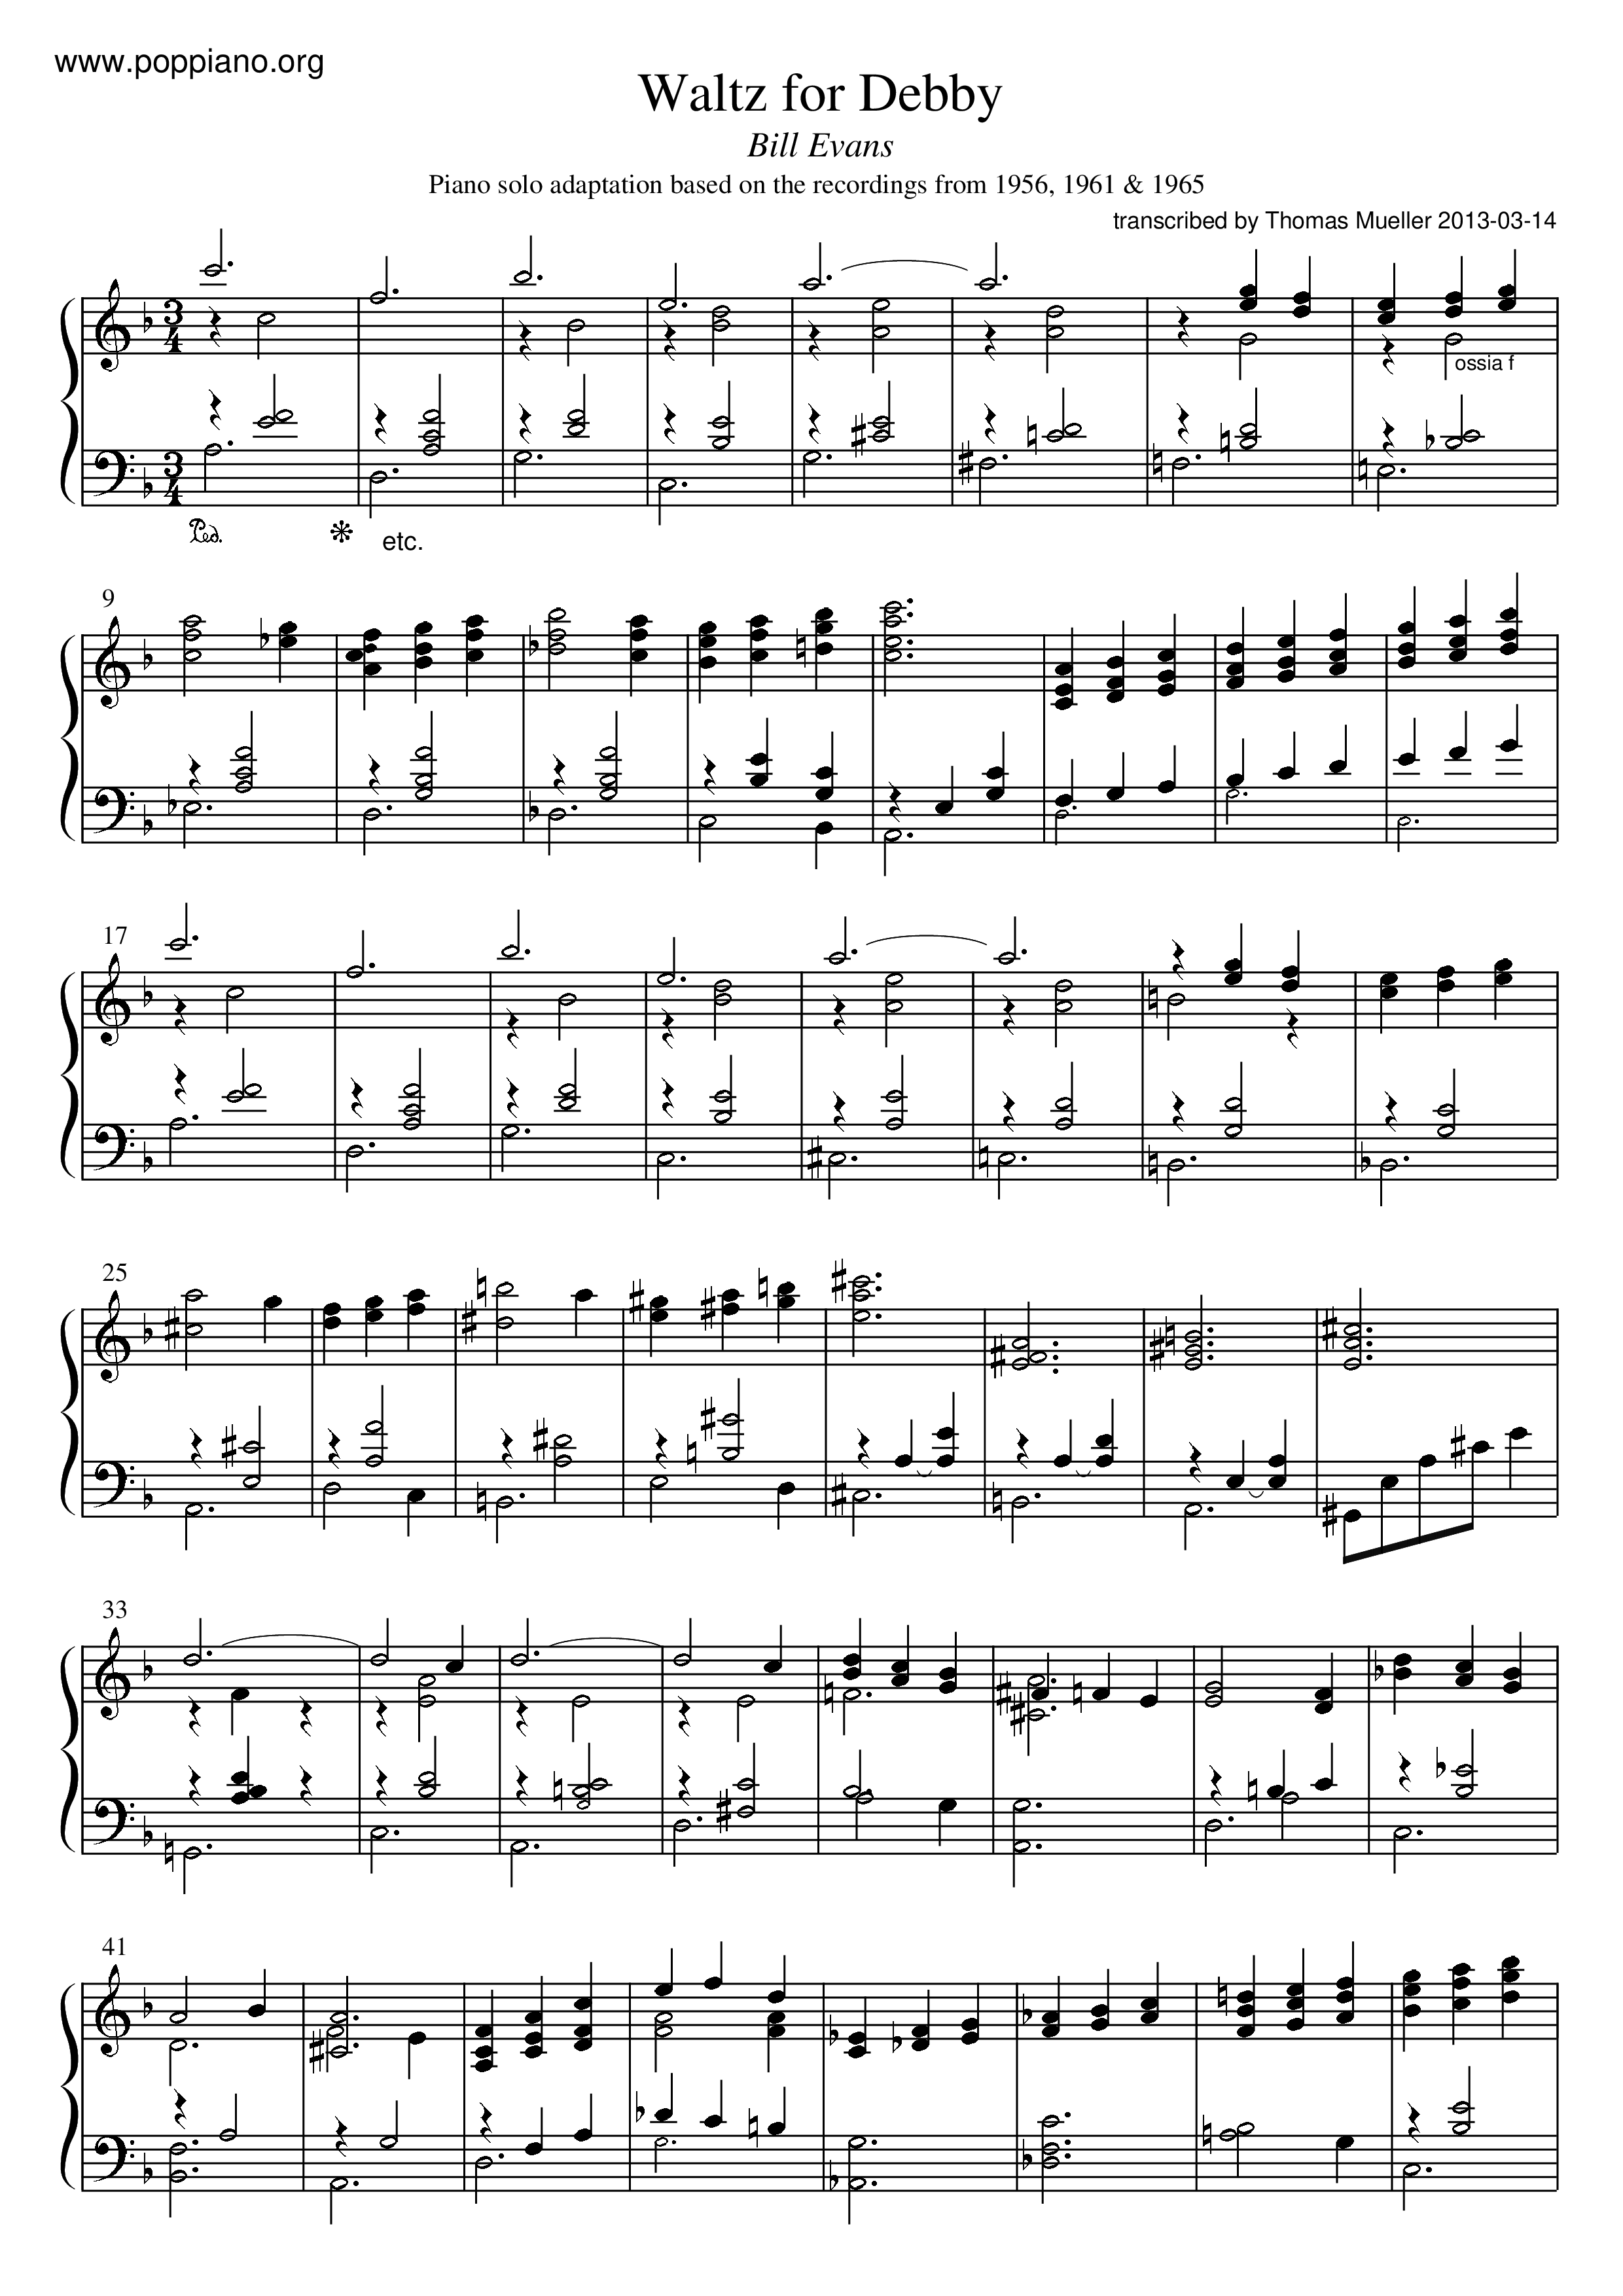 Waltz For Debbyピアノ譜